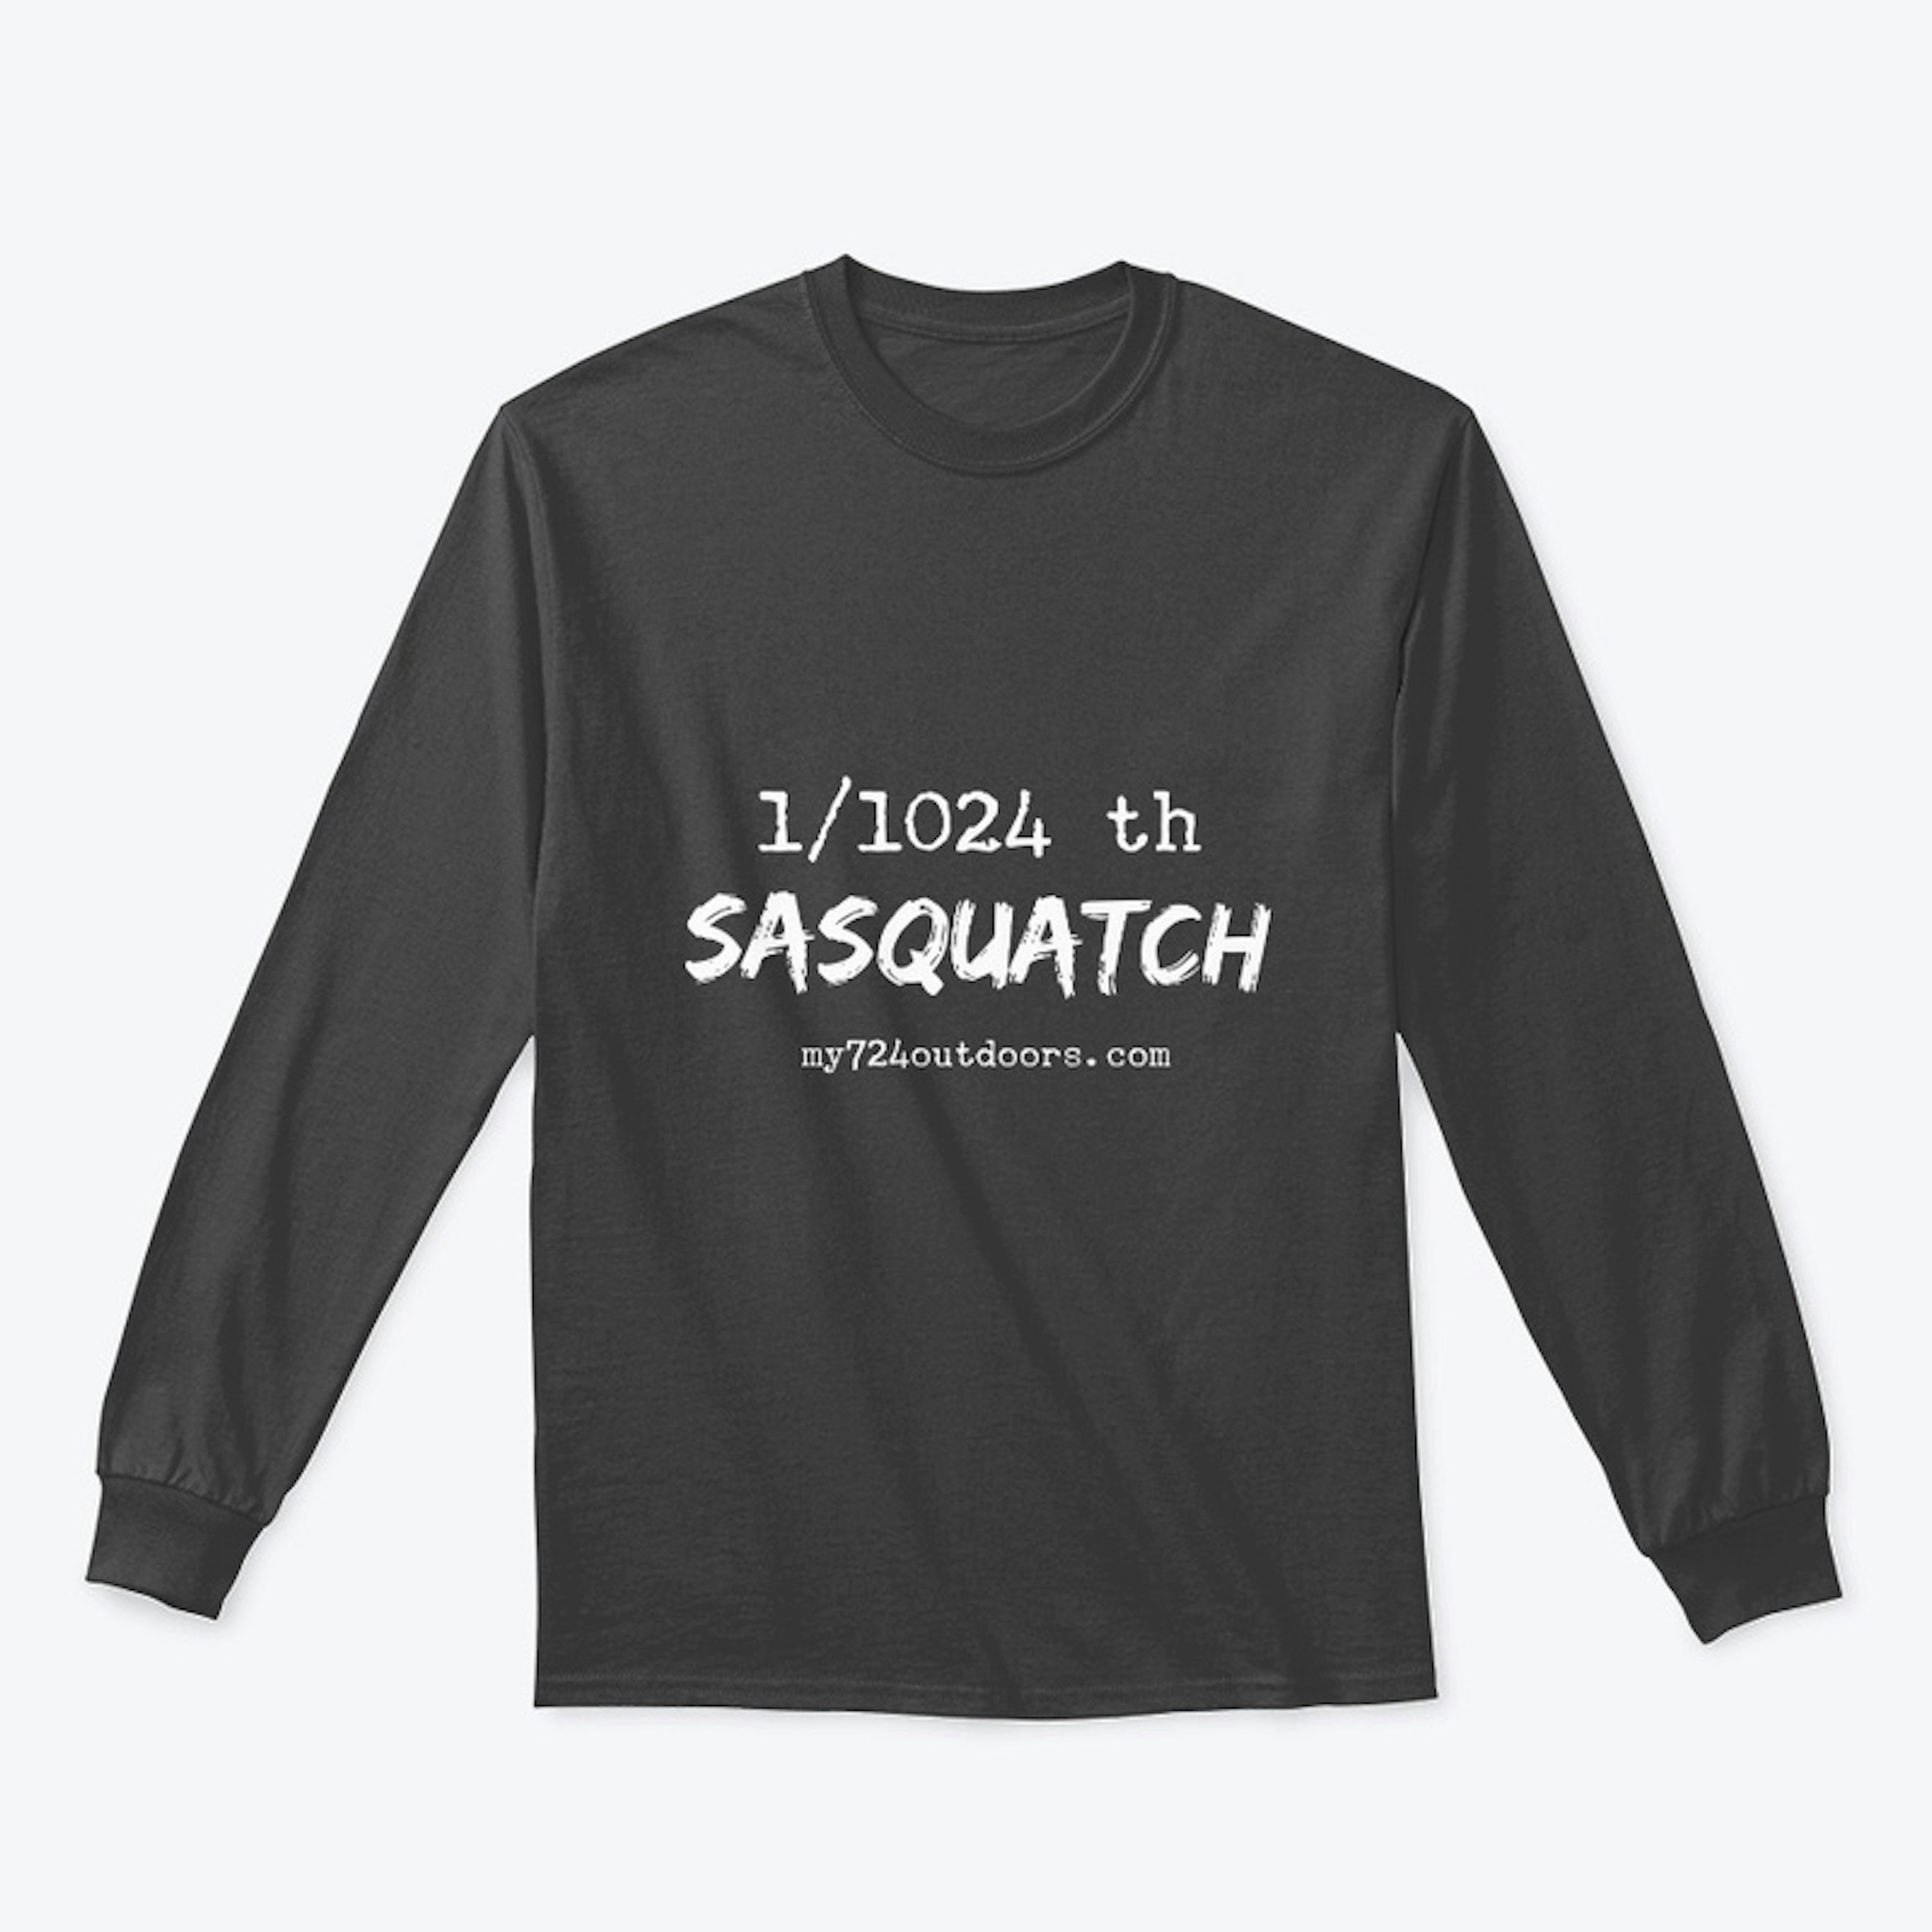 1/1024th Sasquatch White Letters